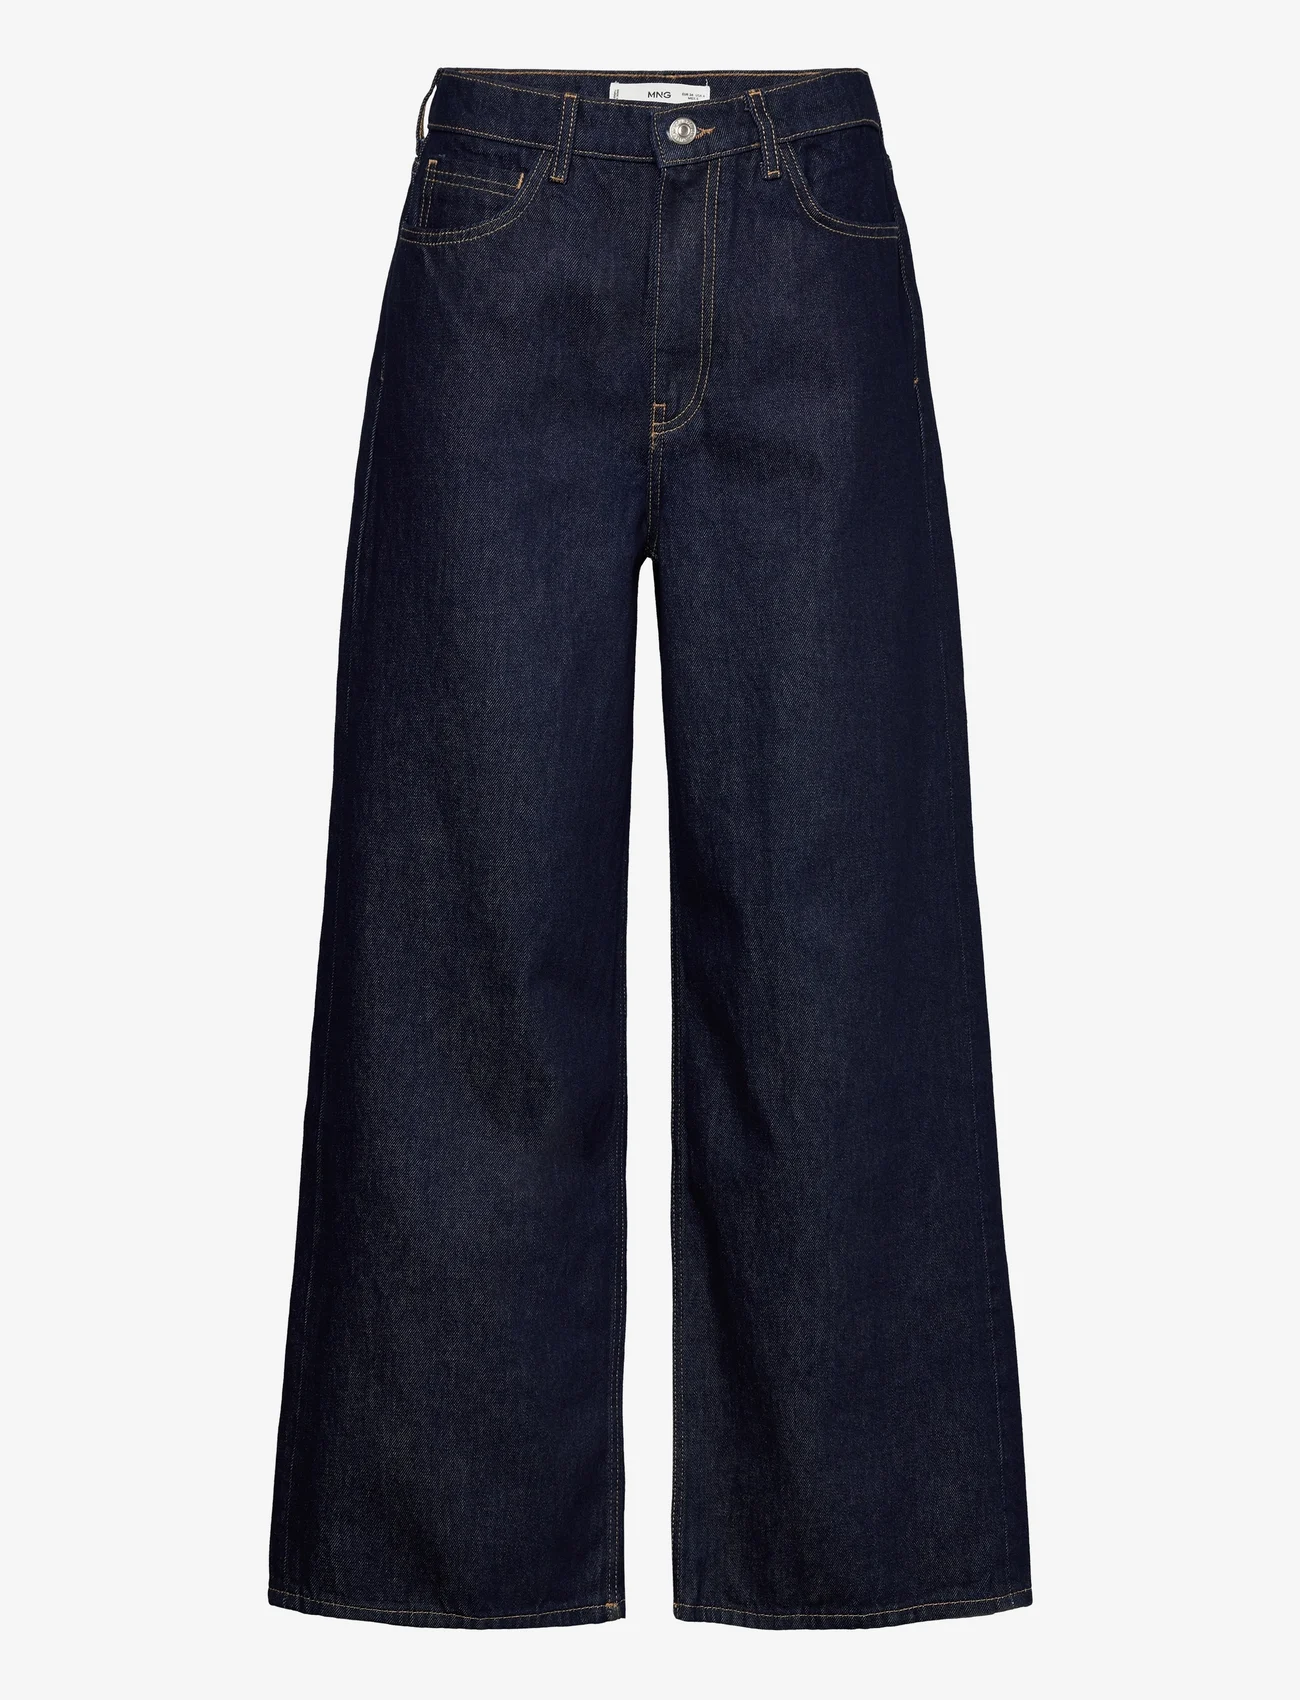 Mango - Low-rise loose-fit wideleg jeans - vida jeans - open blue - 0